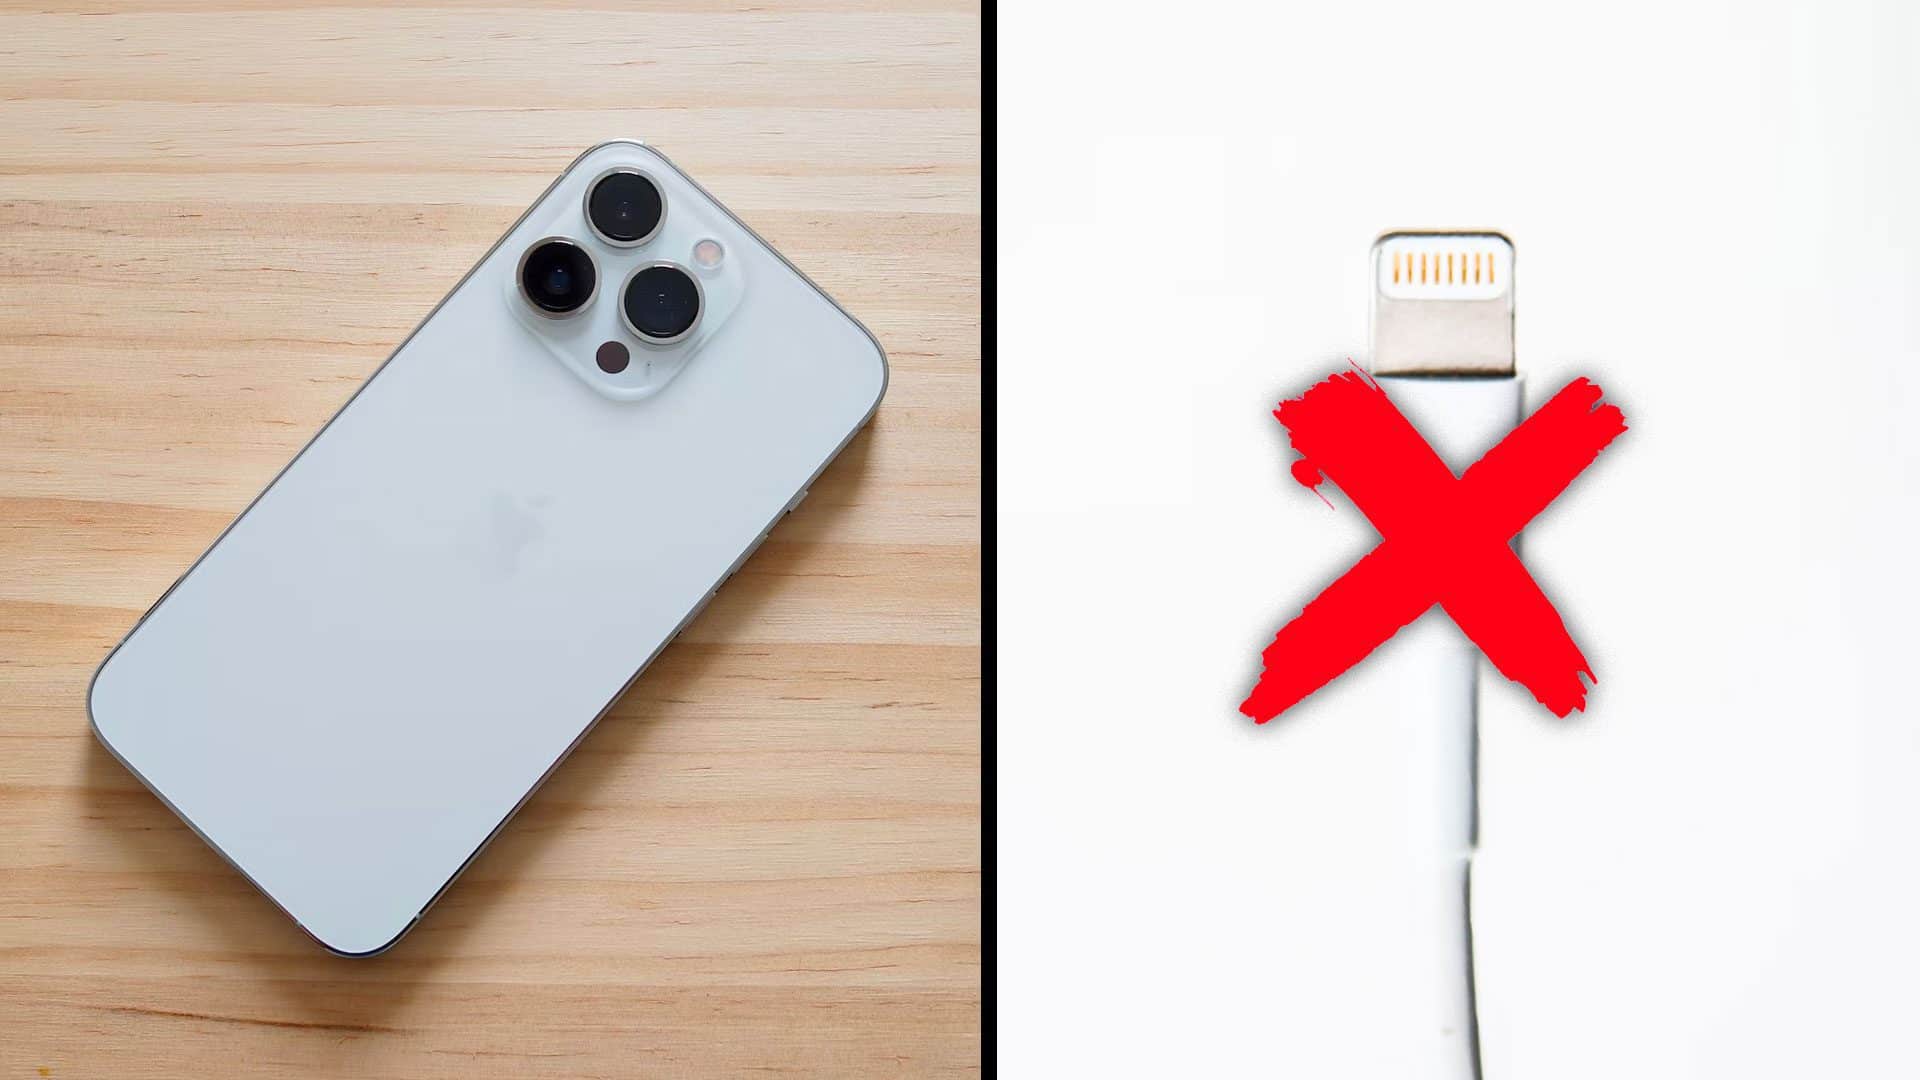 iPhone sa nechce nabíjať - špinavý / zanesený Lightning port